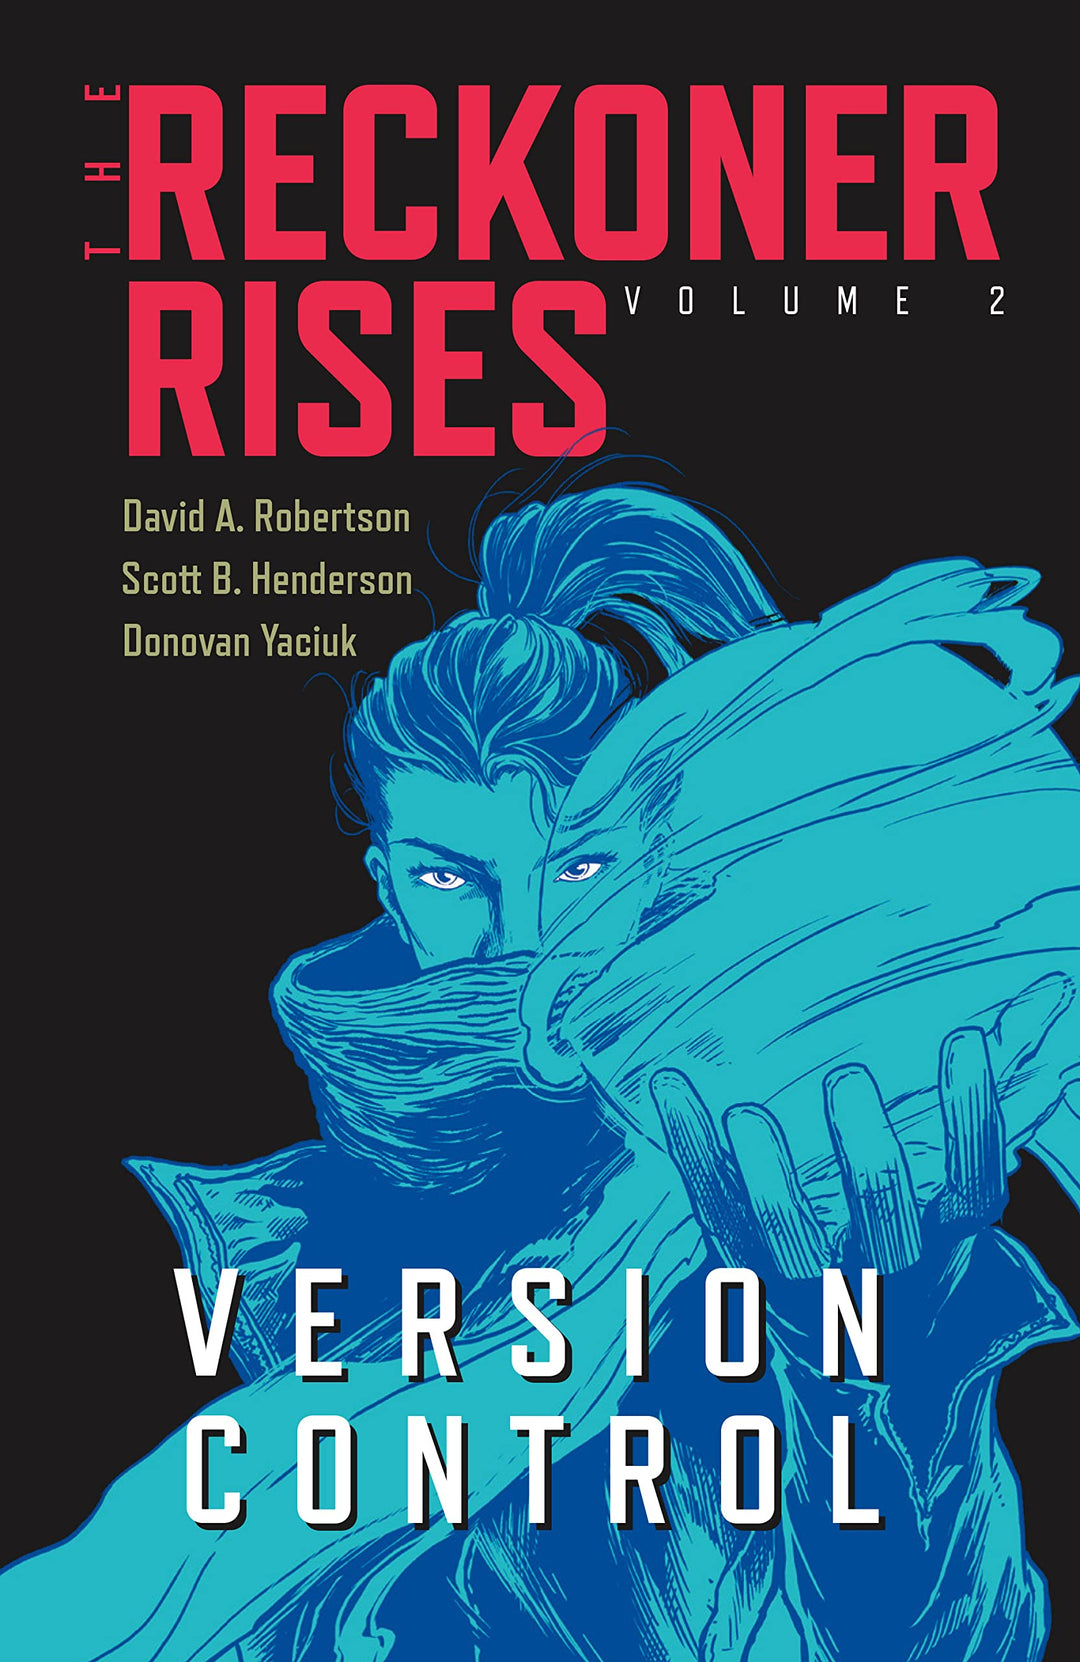 Reckoner Rises Volume 2: Version Control by David A. Robertson